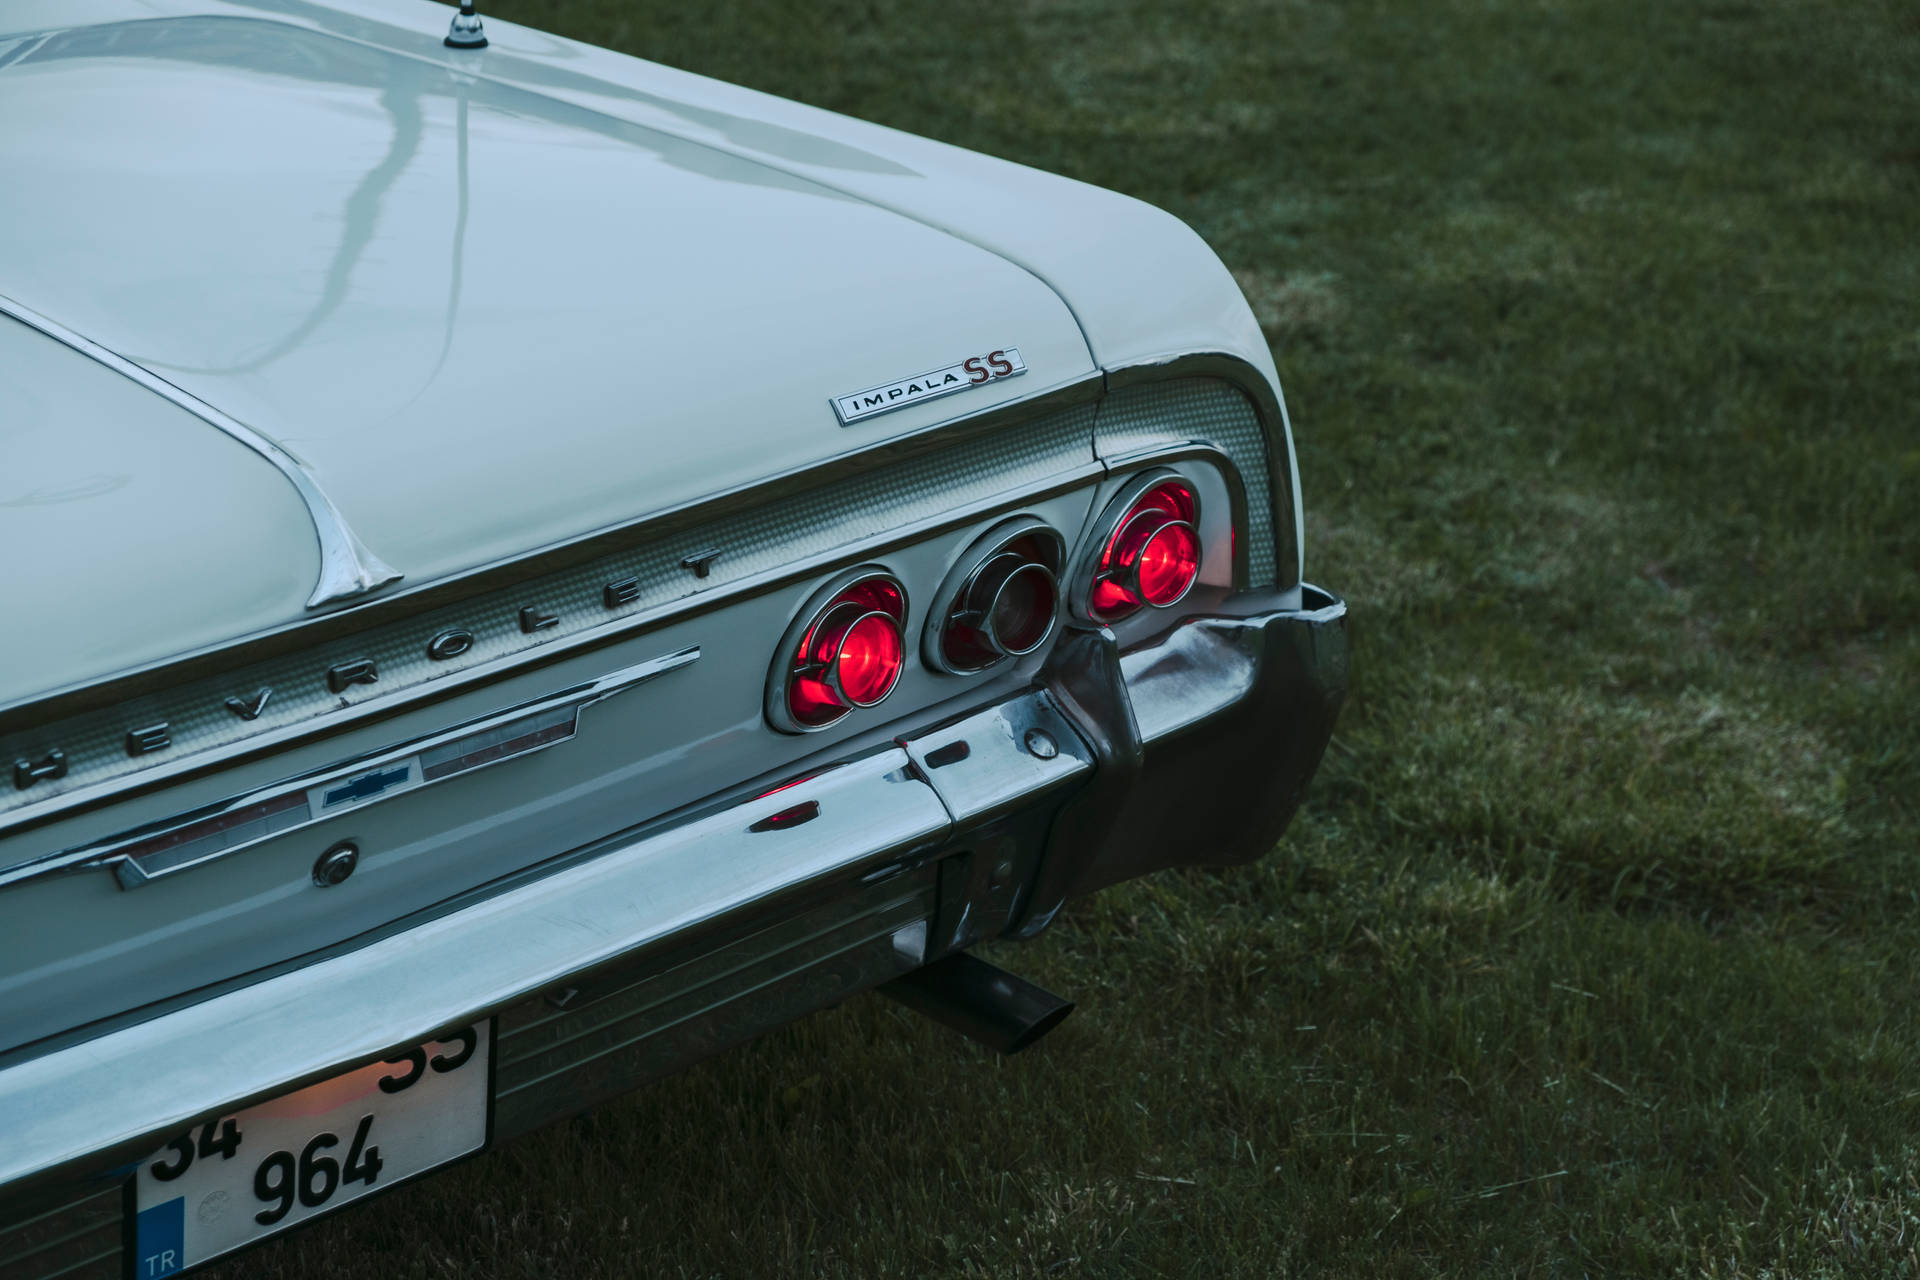 Lowrider Impala Ss Back Wallpaper